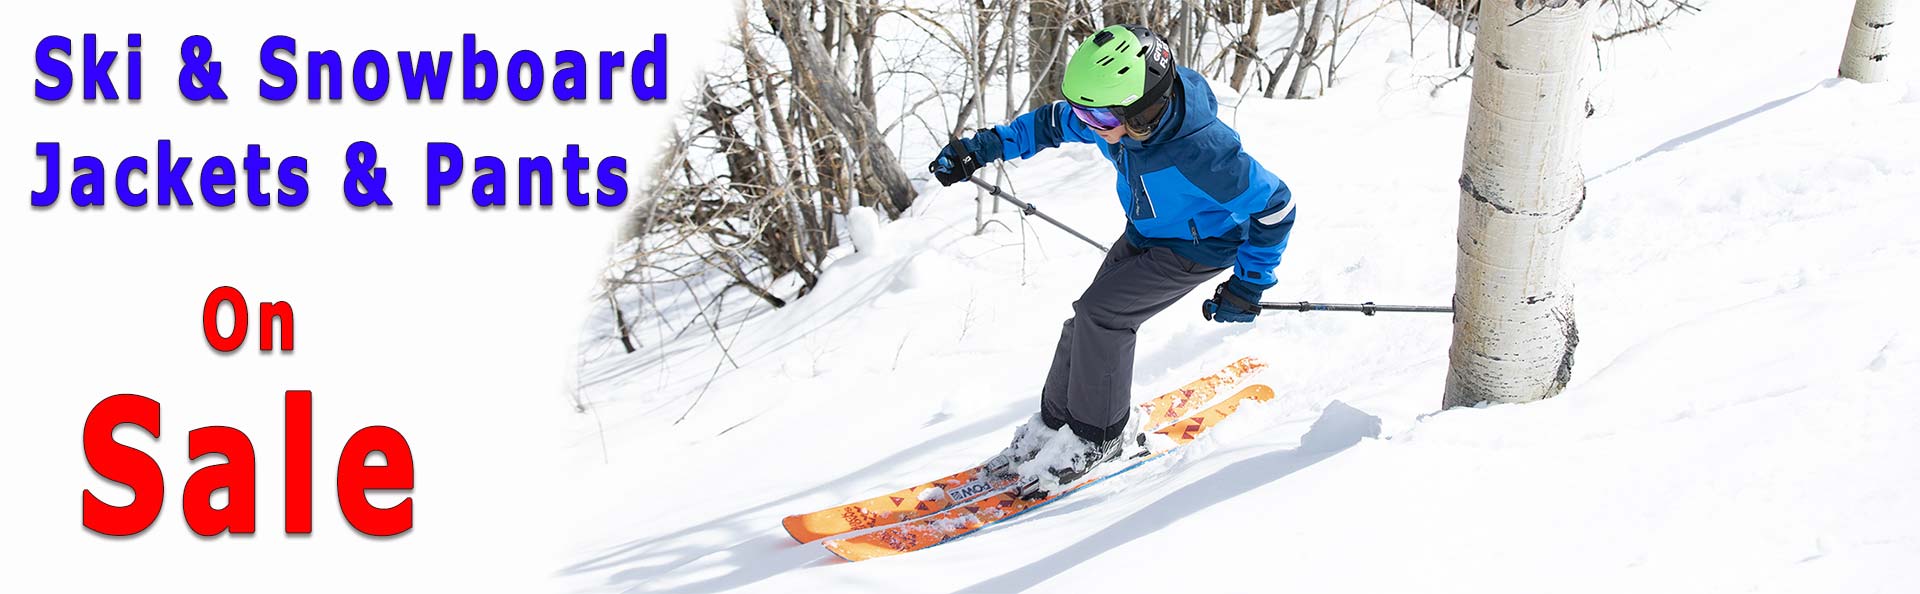 Ski & Snowboard Jackets on Sale